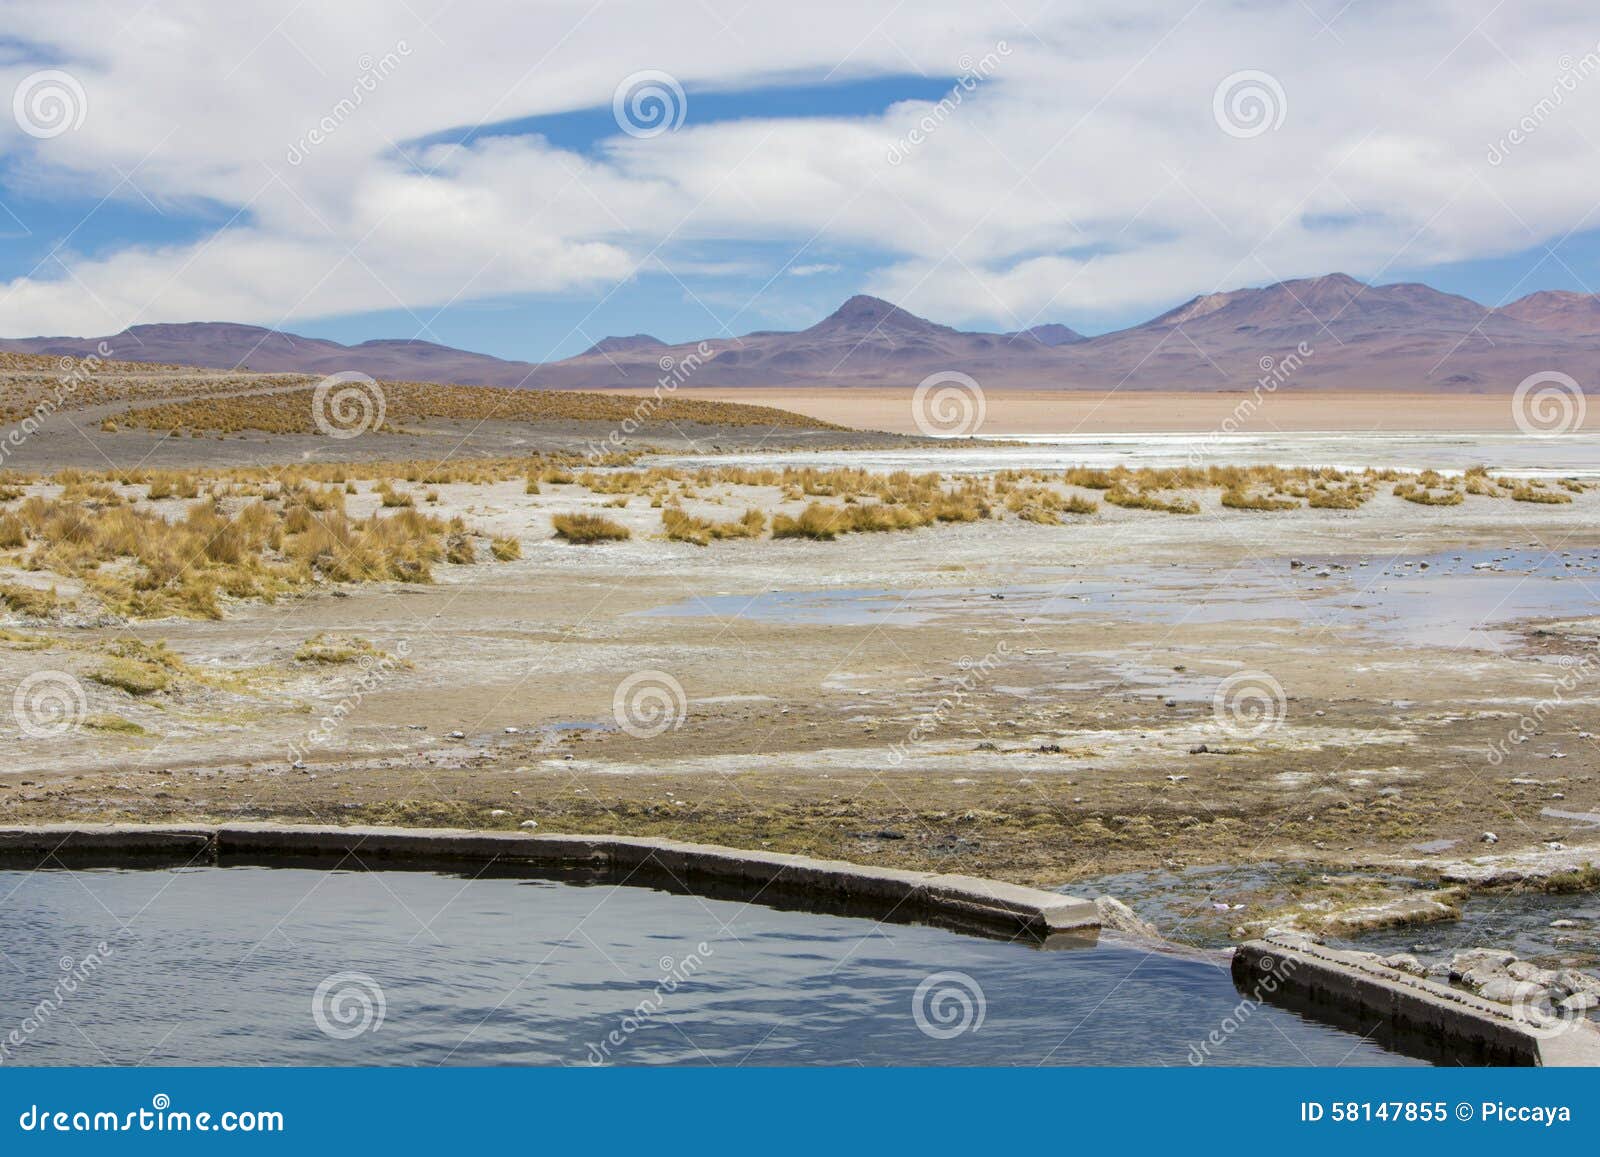 hot springs at the termas de polques, bolivia